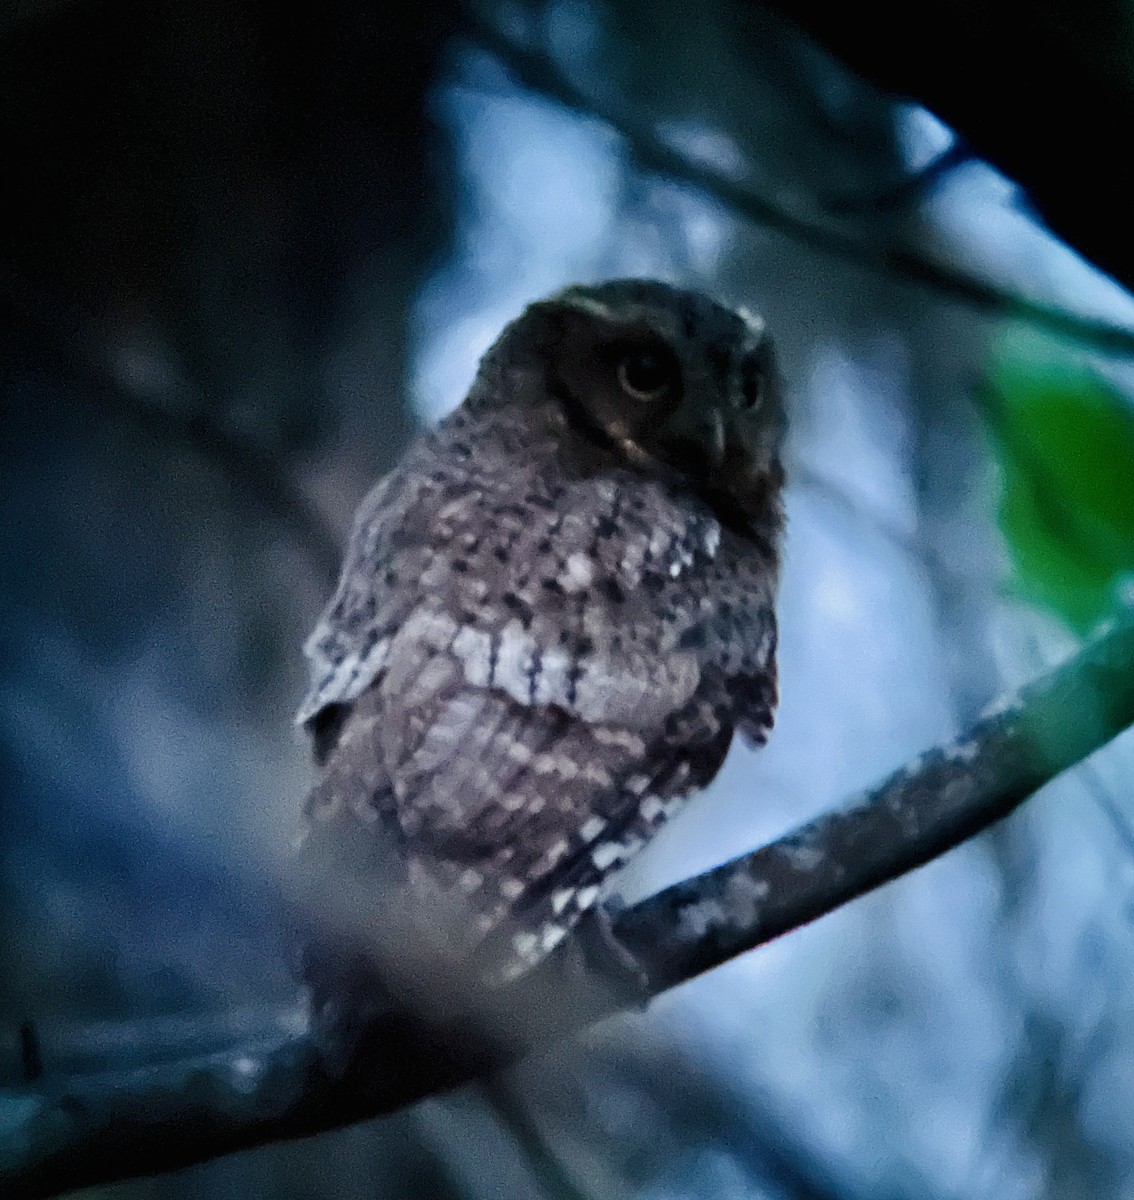 Middle American Screech-Owl - Alfredo  birding guide @tolgonzalezalfredo@yahoo.com WHATSAPP +502 31457601